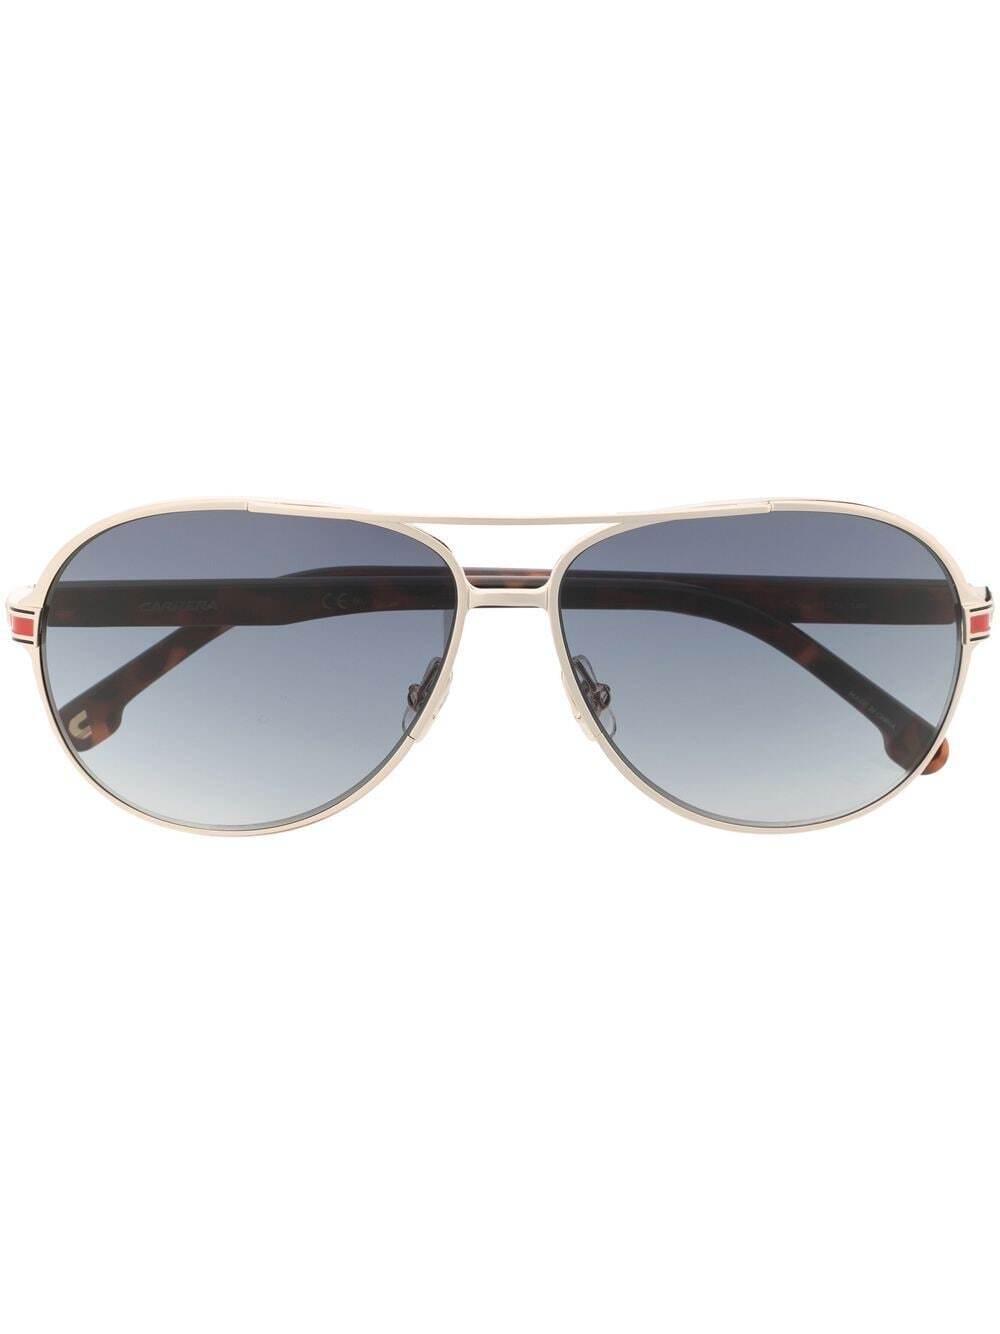 Carrera pilot-style sunglasses - Gold